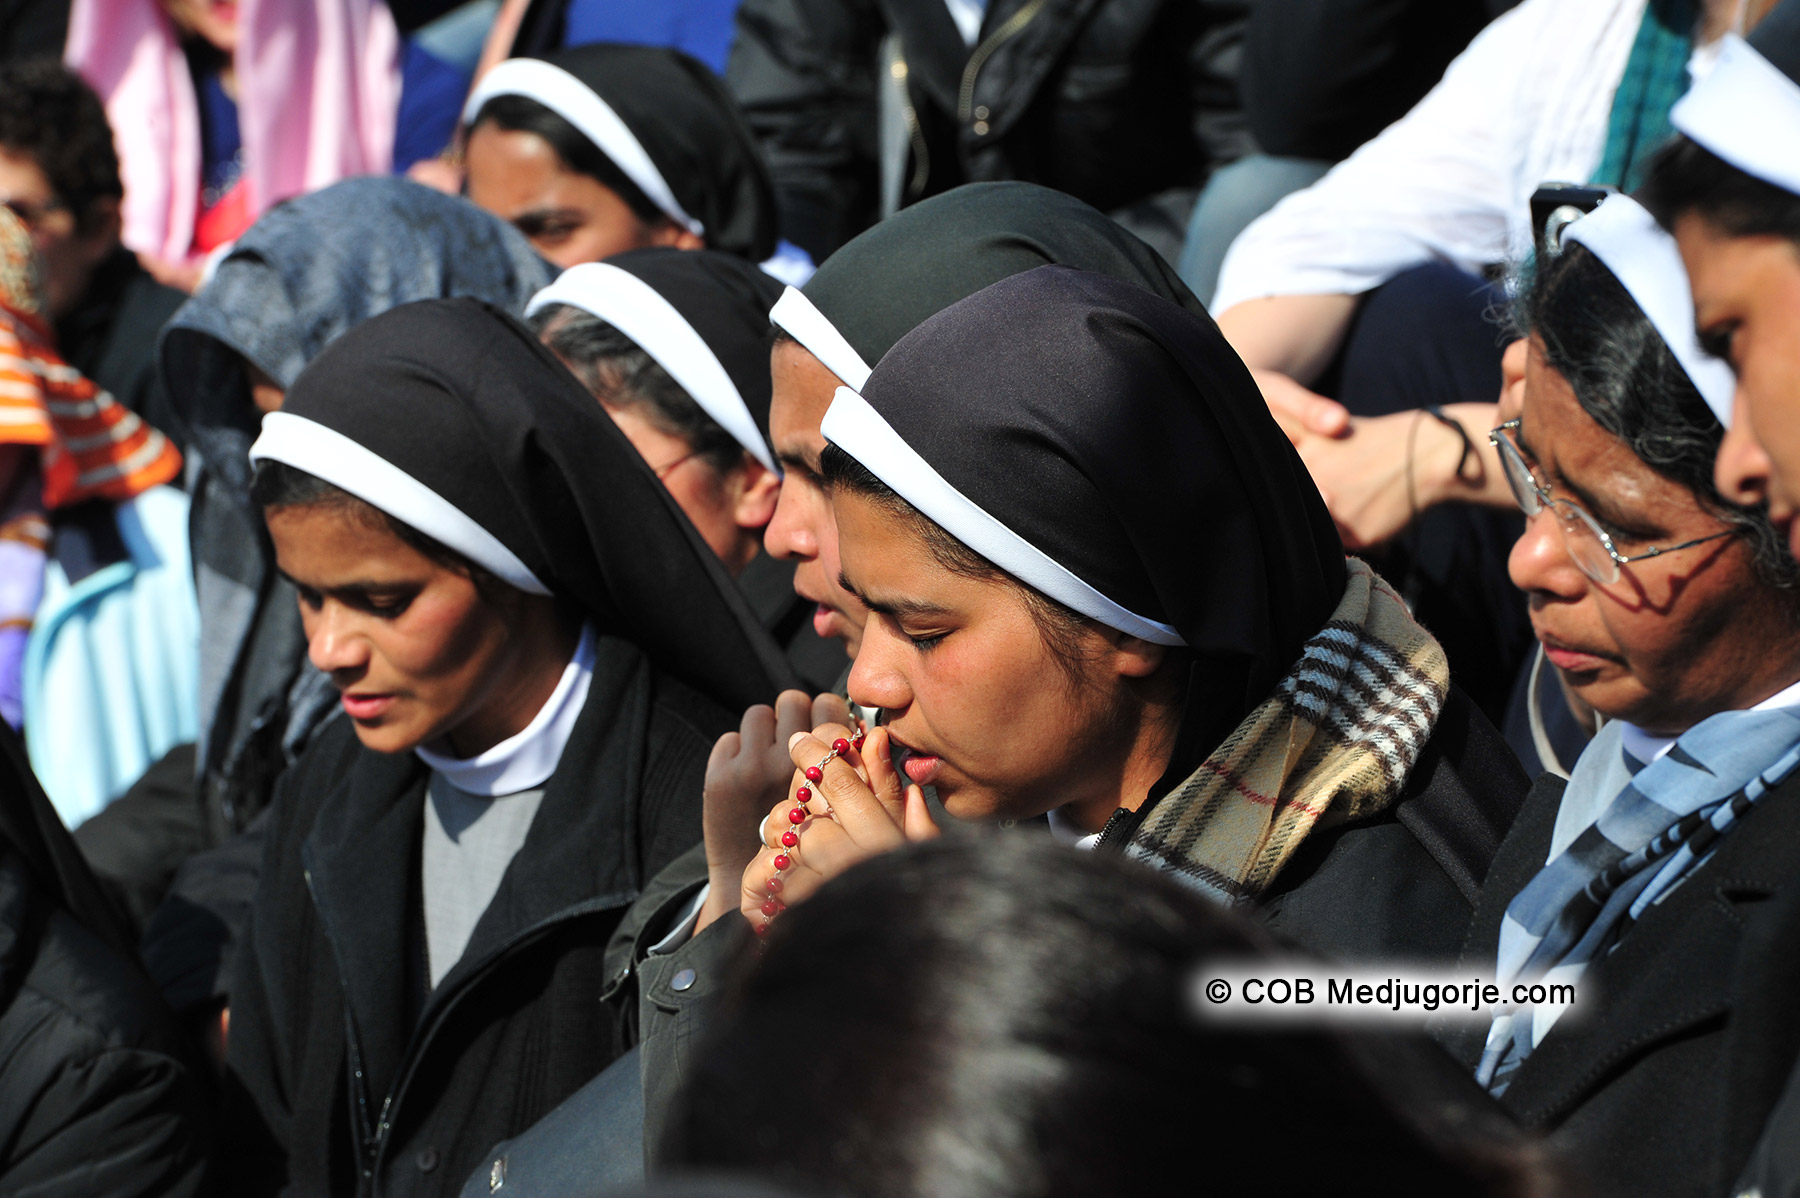 Nuns praying, March 18, 2012